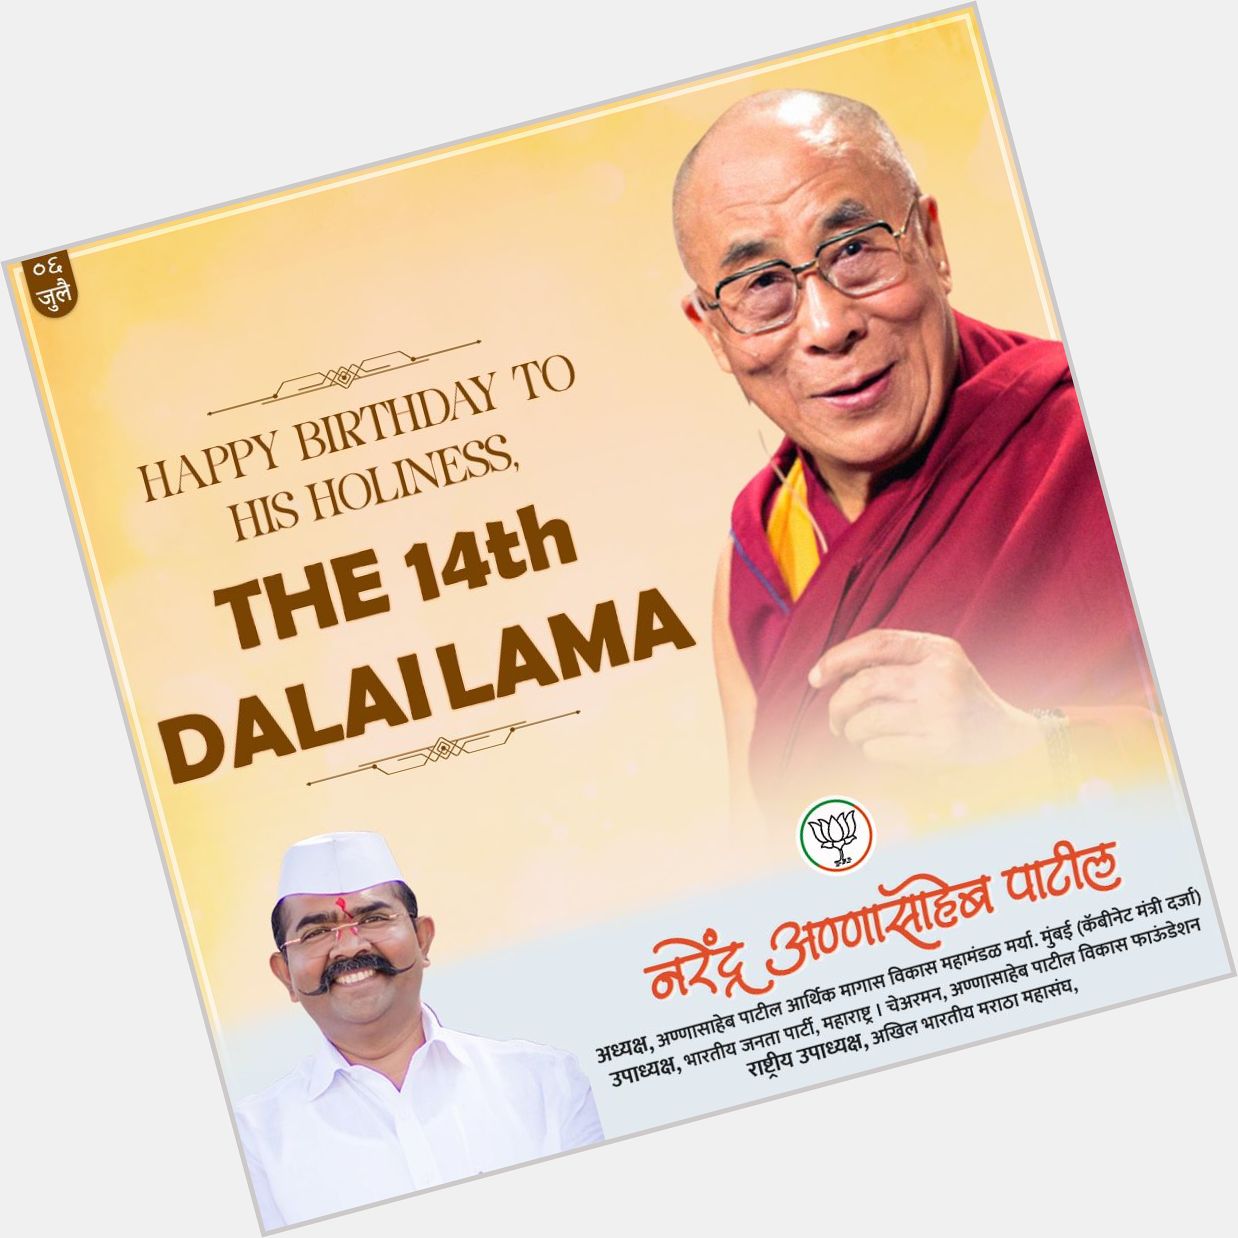 HAPPY BIRTHDAY TO HIS HOLINESS, THE 14th DALAI LAMA
.  